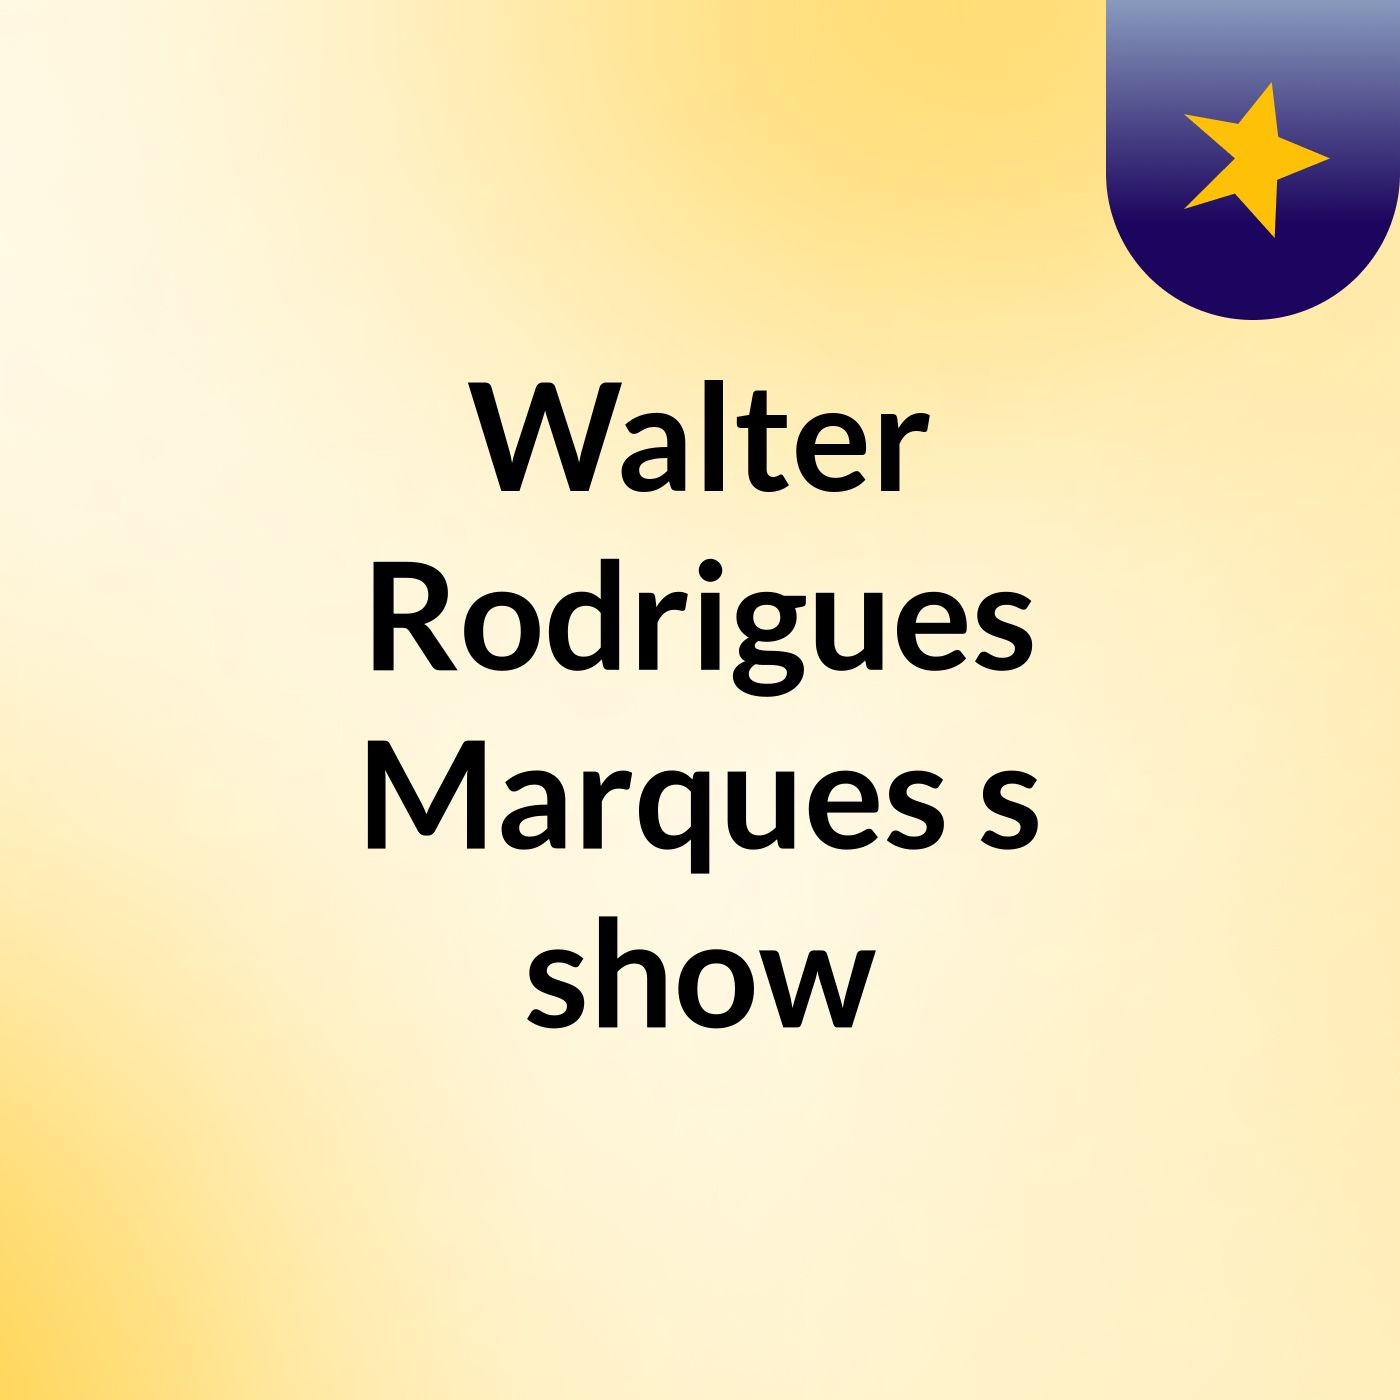 Sky ROJOEpisódio 6 - Walter Rodrigues Marques's show